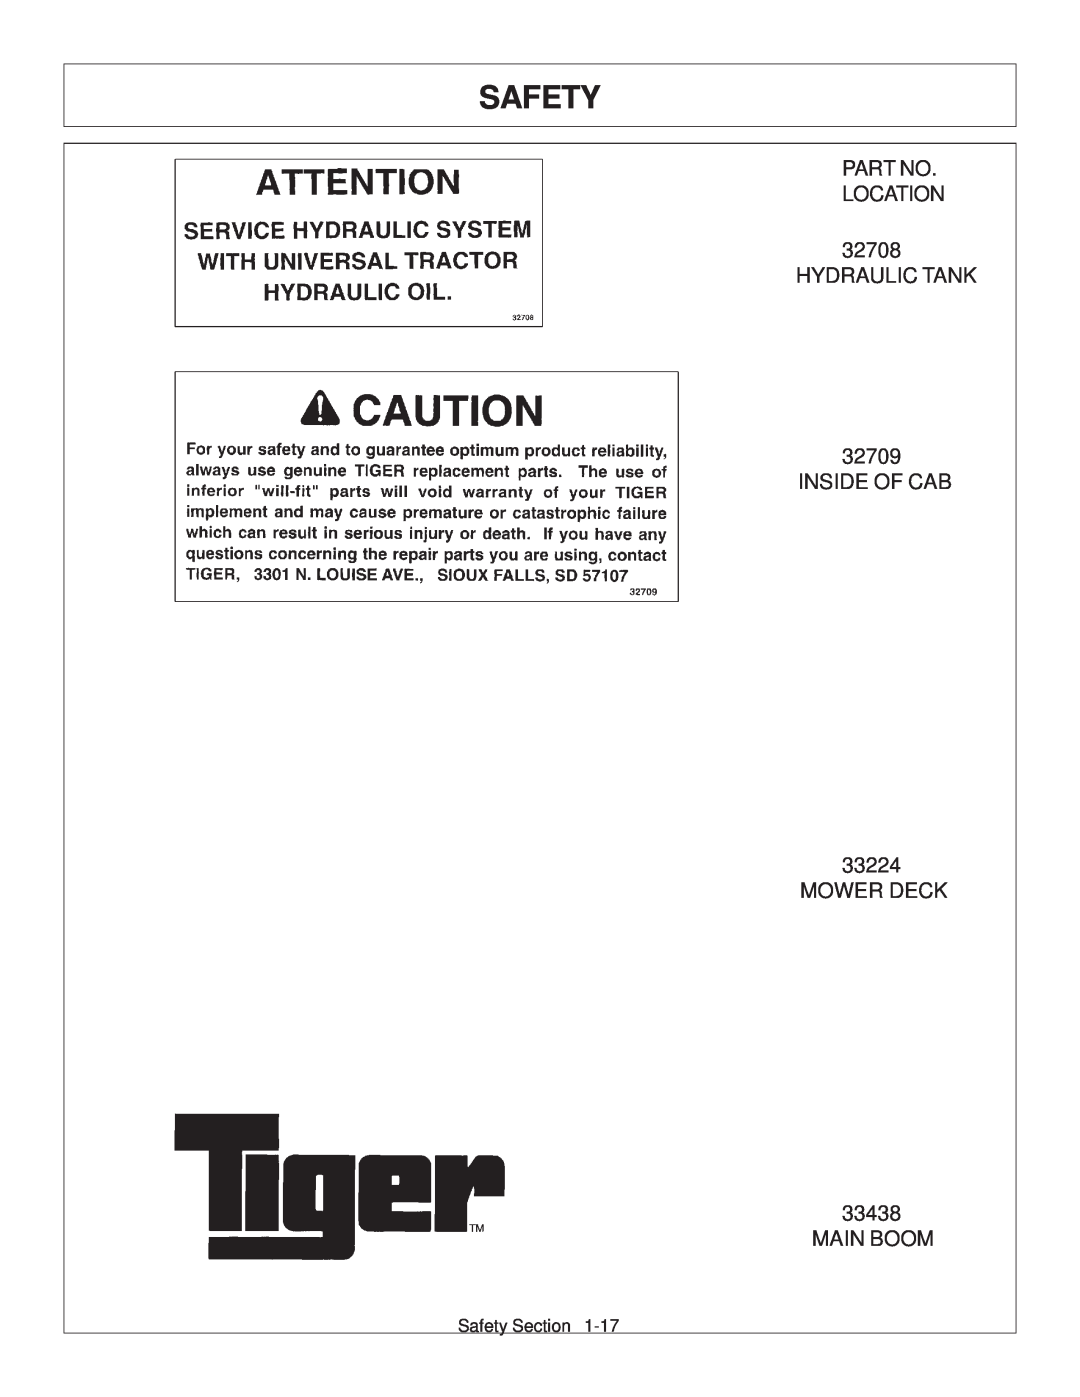 Tiger JD 62-6420 manual Safety, LOCATION 32708 HYDRAULIC TANK 32709 INSIDE OF CAB 33224 MOWER DECK, Main Boom 